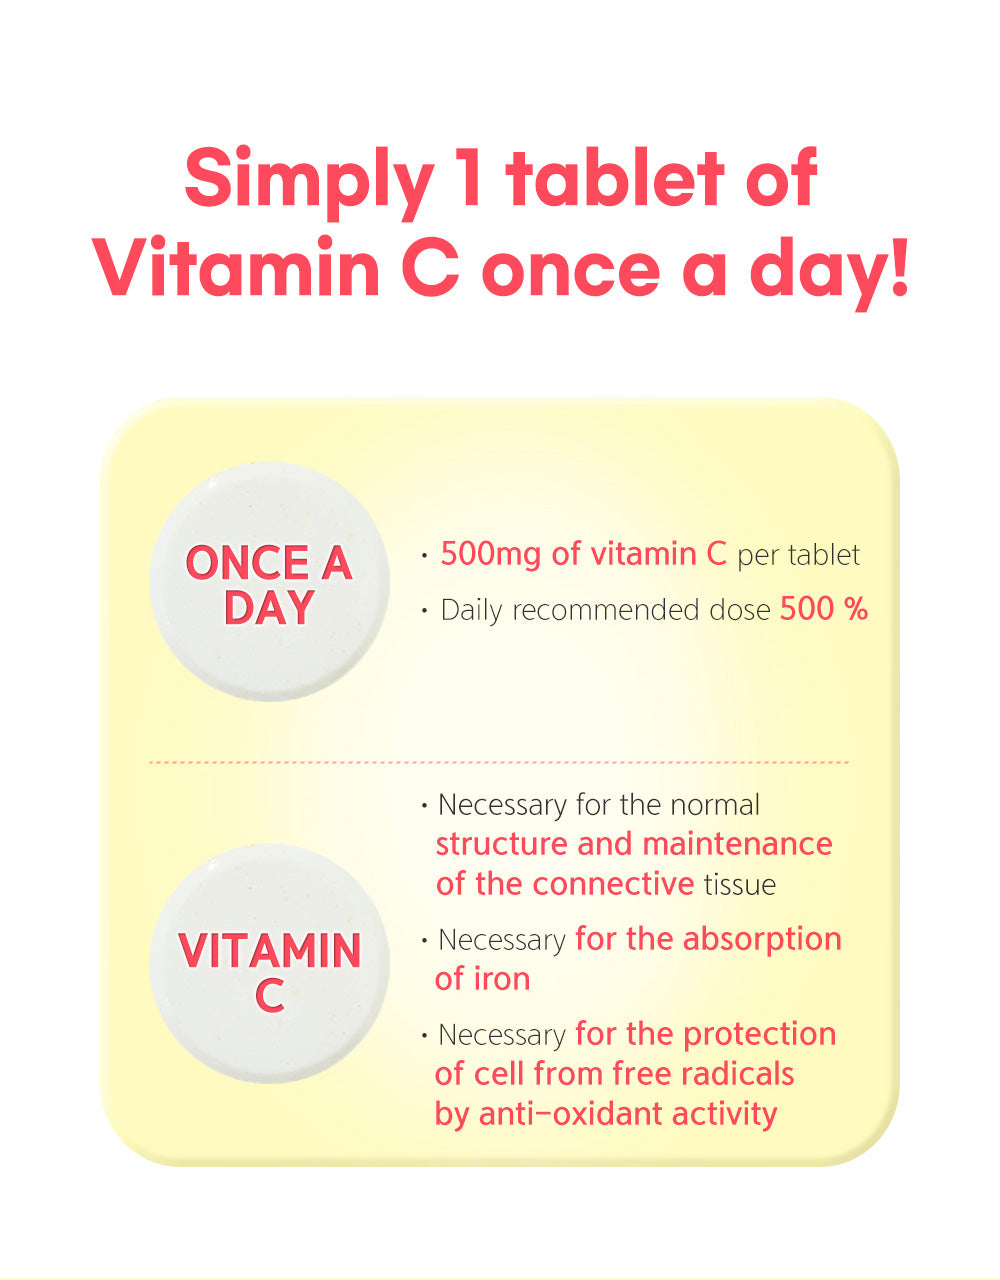 Dr. Elizabeth’s Family Chewable Vitamin-C 500 2g x 60 tablets Refreshing Lemon Flavour for Optimal Health